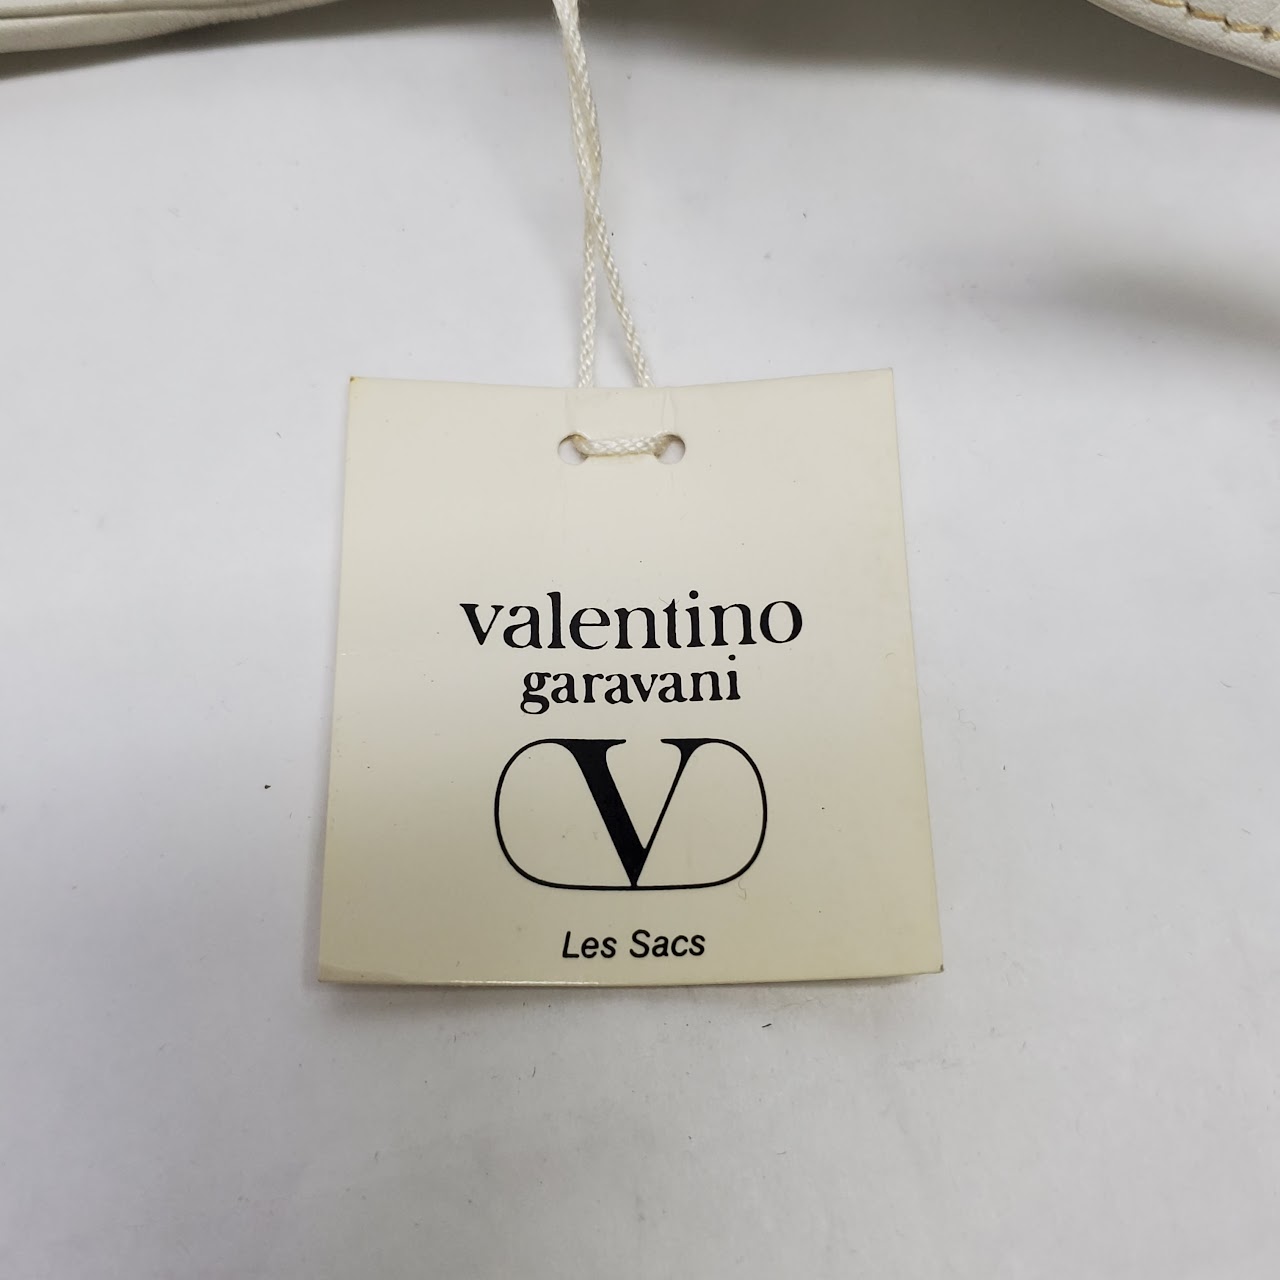 Valentino Garavani Les Sacs Vintage Convertible Clutch